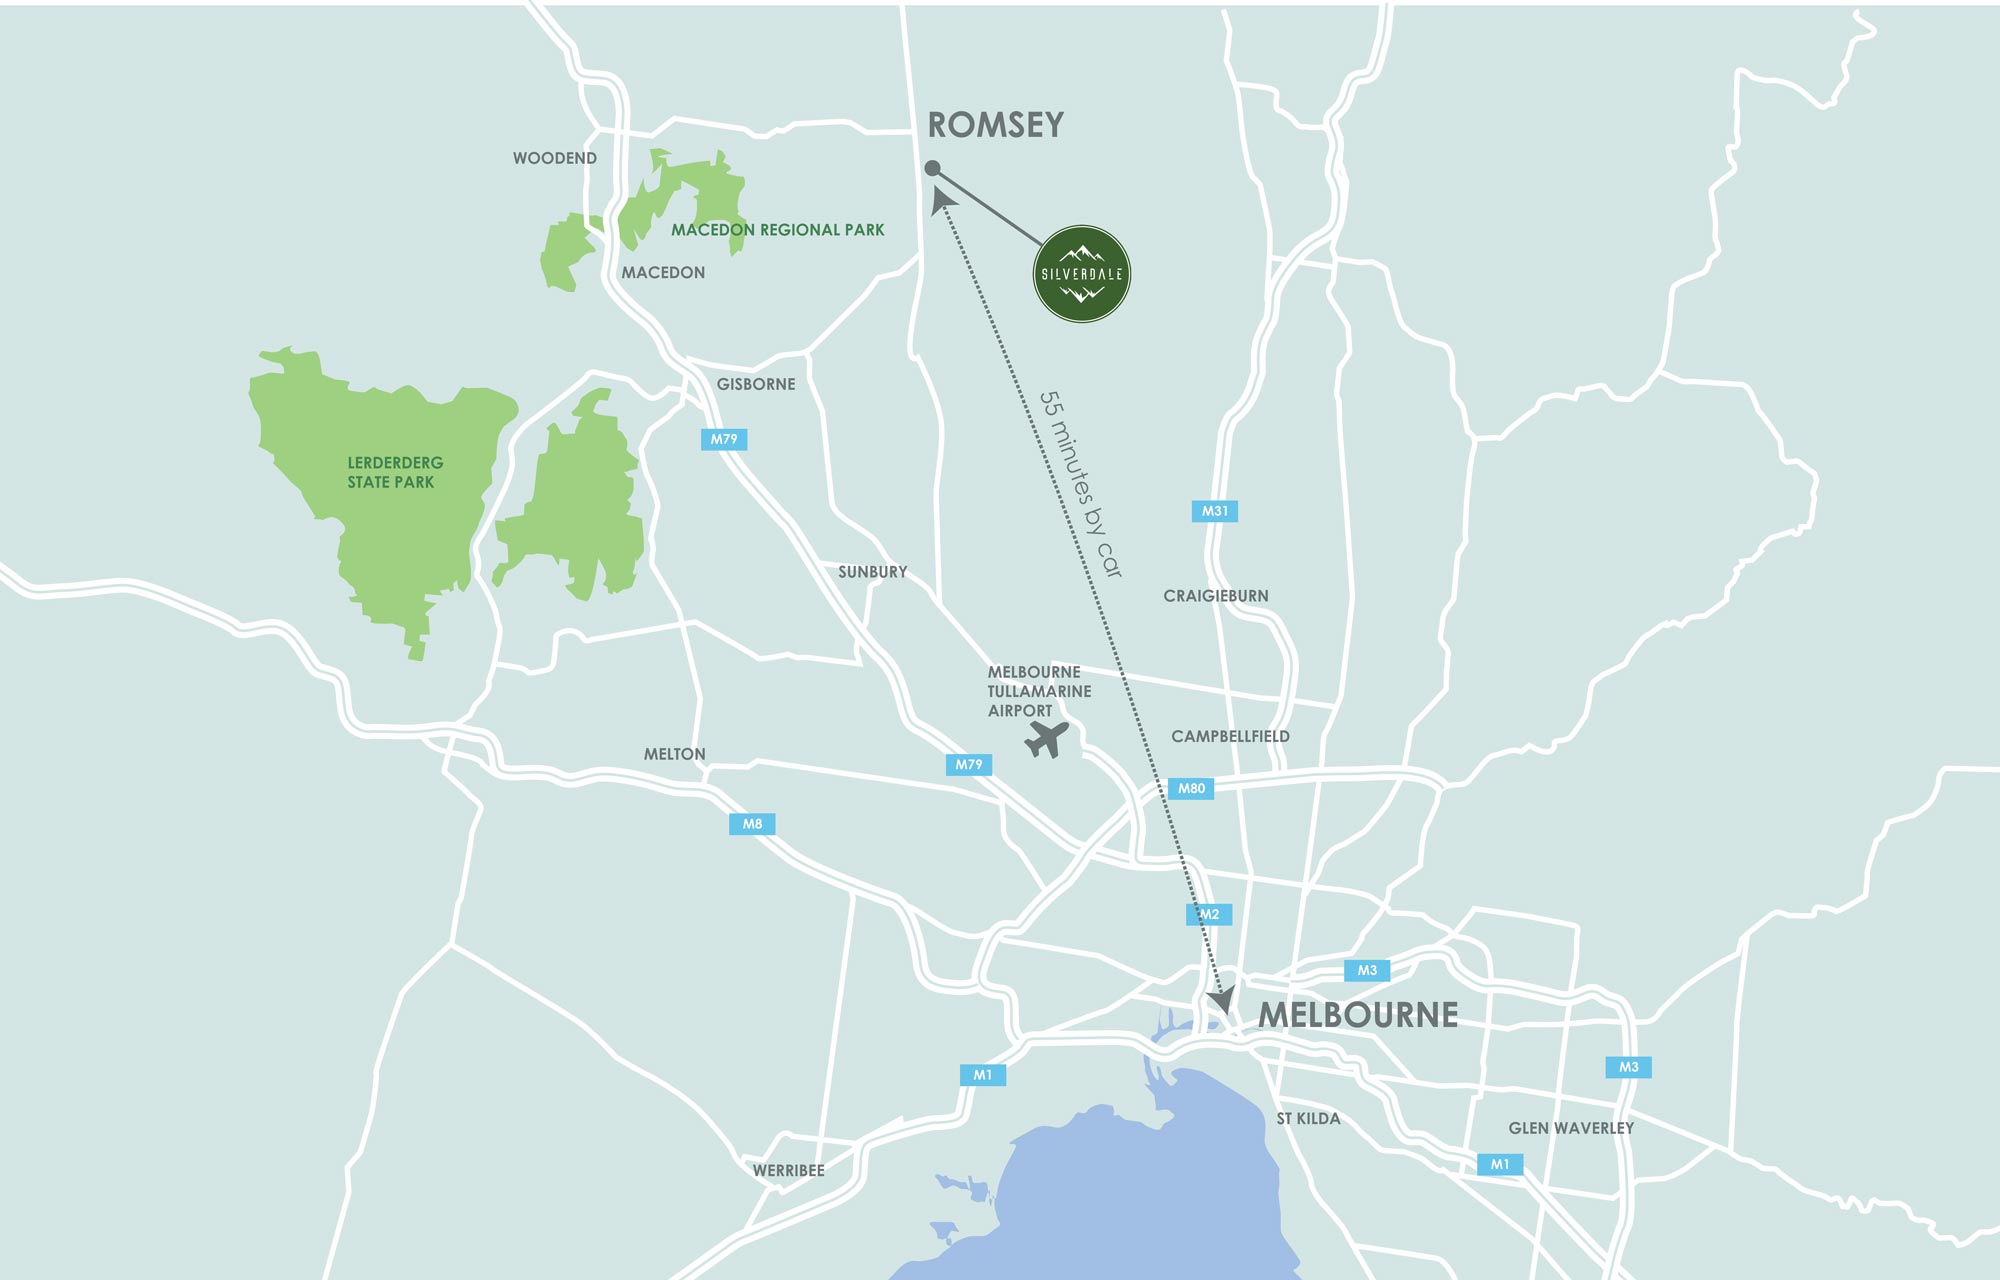 SILVERDALE ESTATE and Melbourne area locsation map